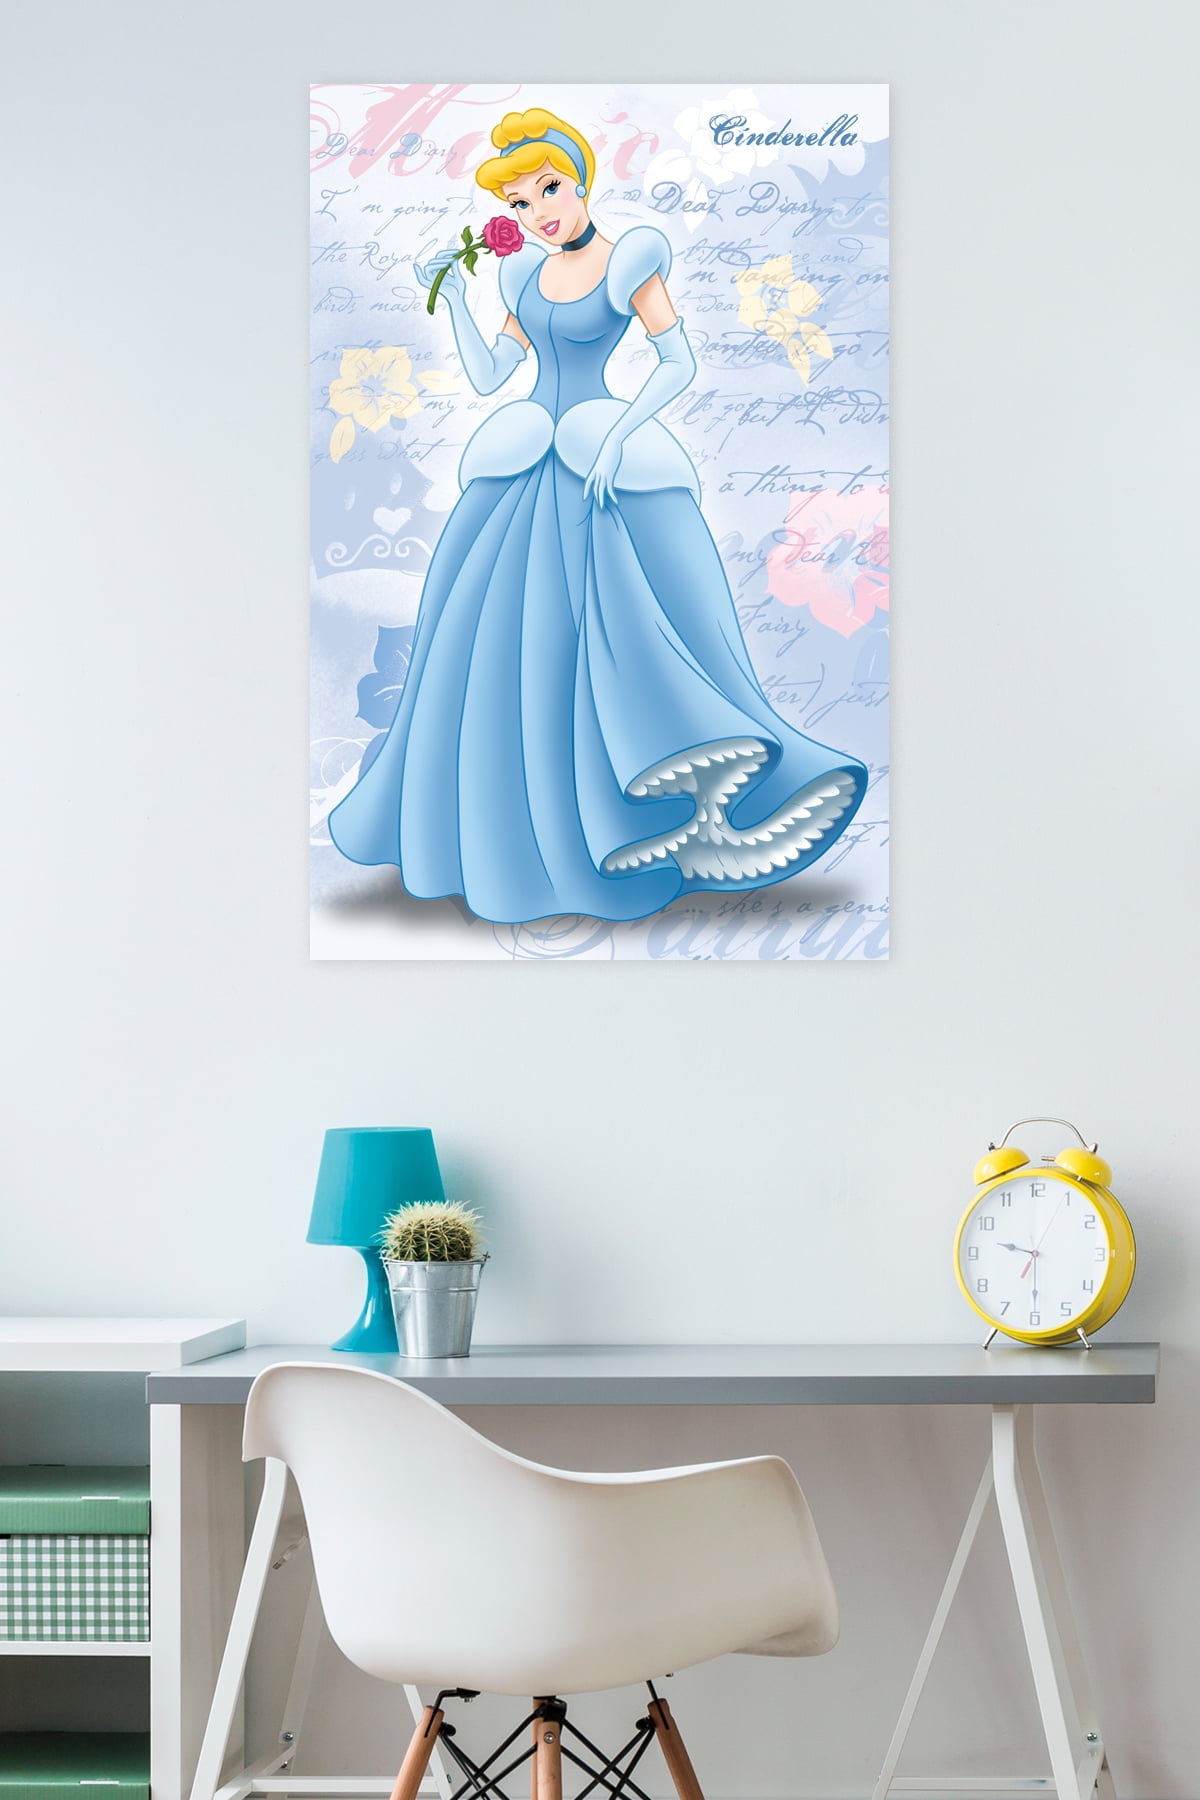 Disney Cinderella - Dazzling Wall Poster, 22.375